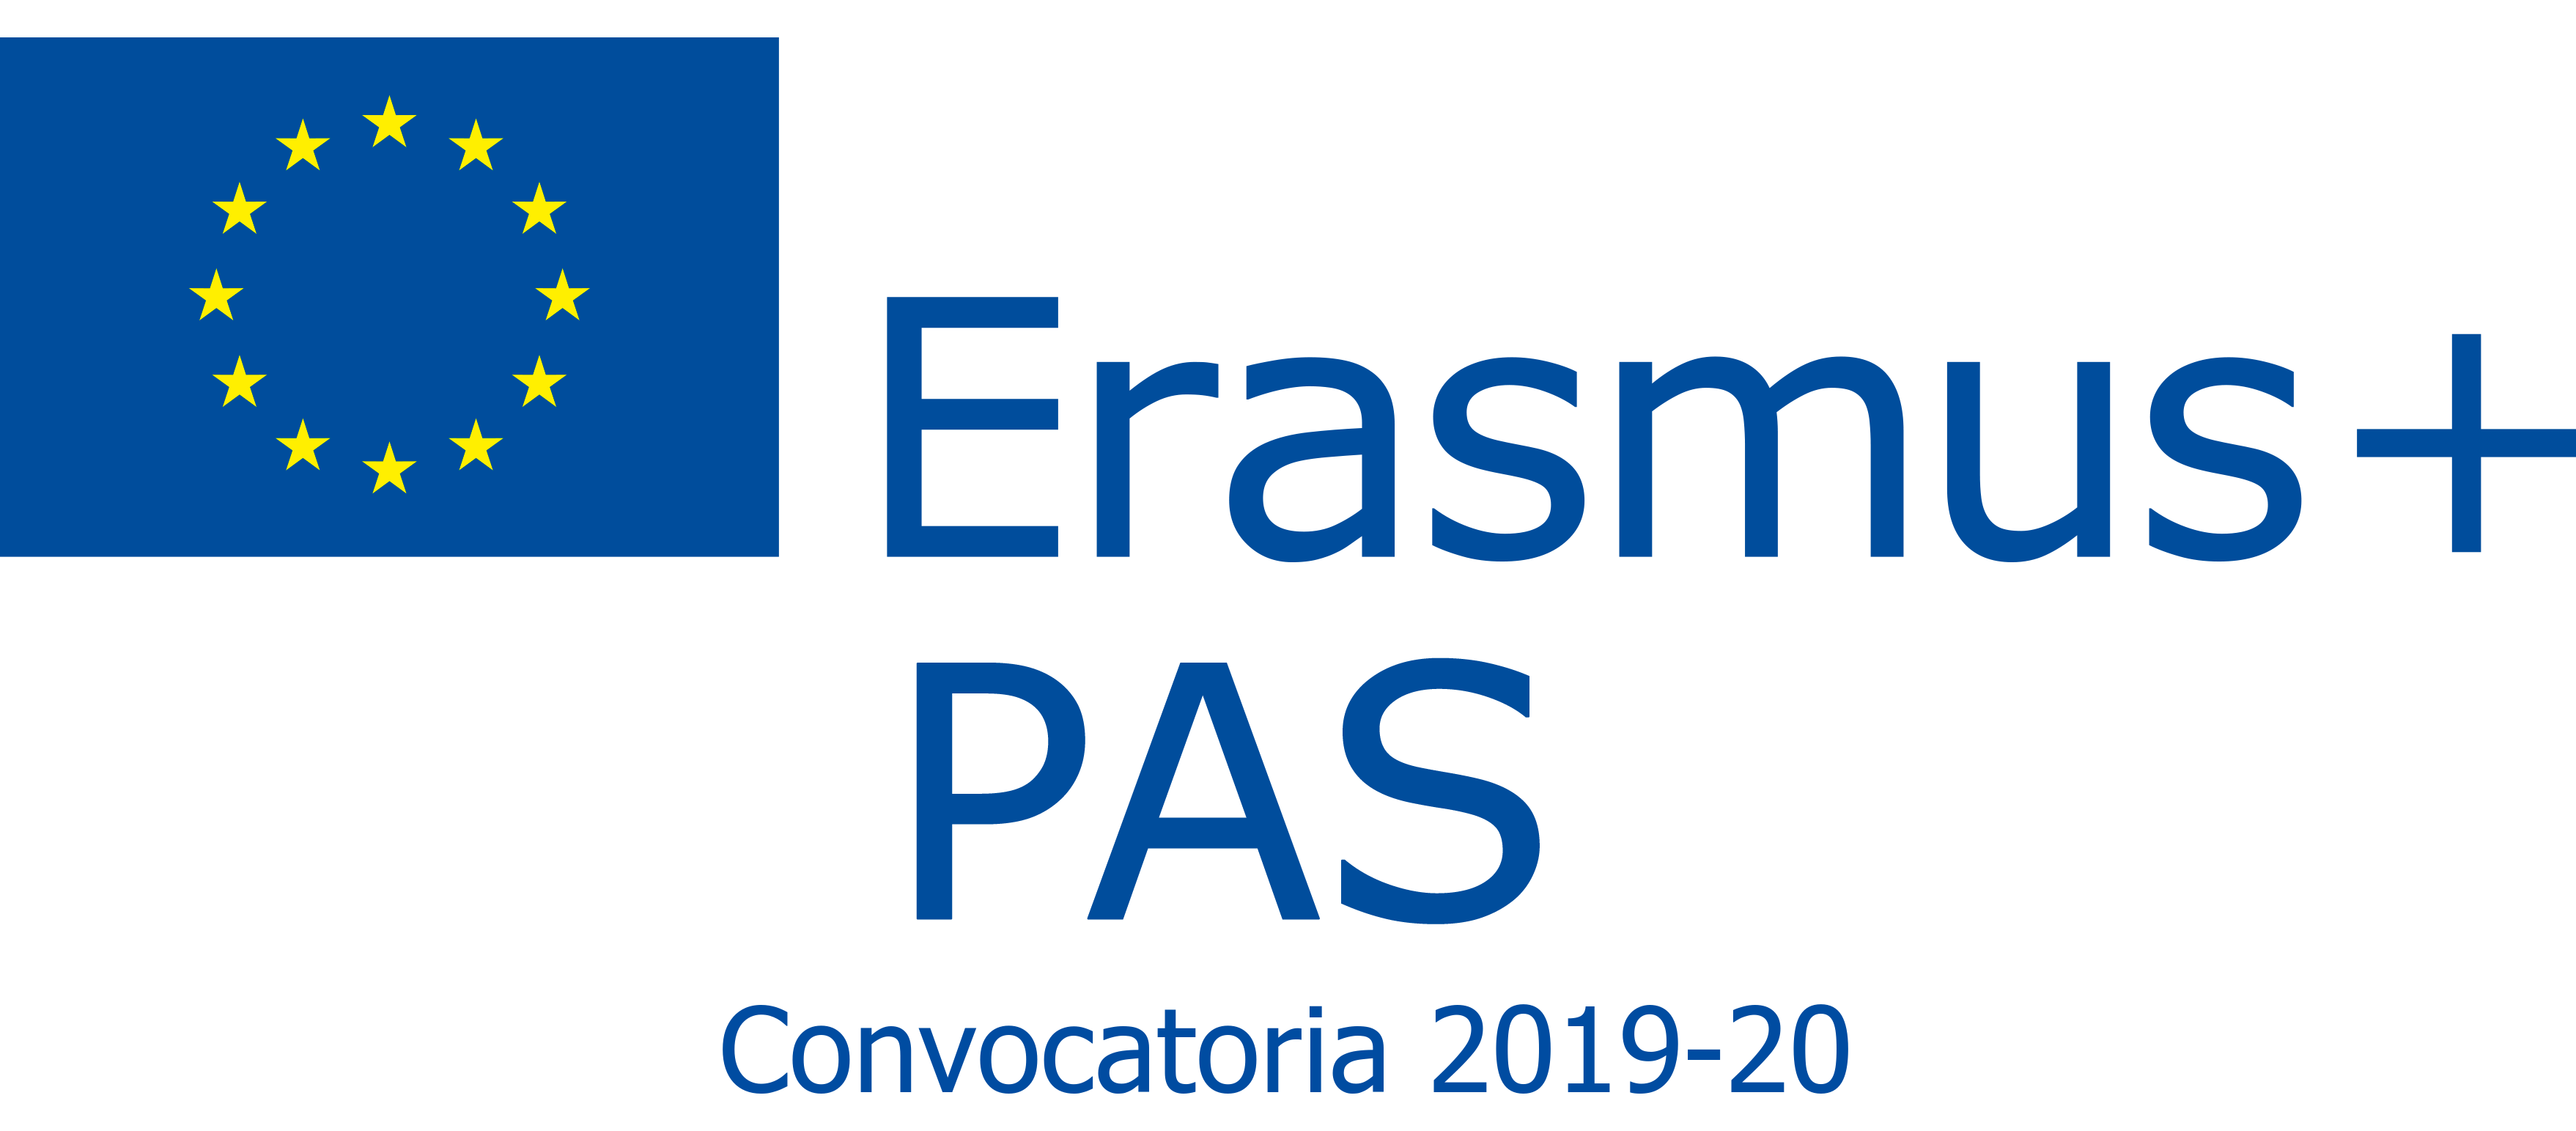 Erasmus+ PAS